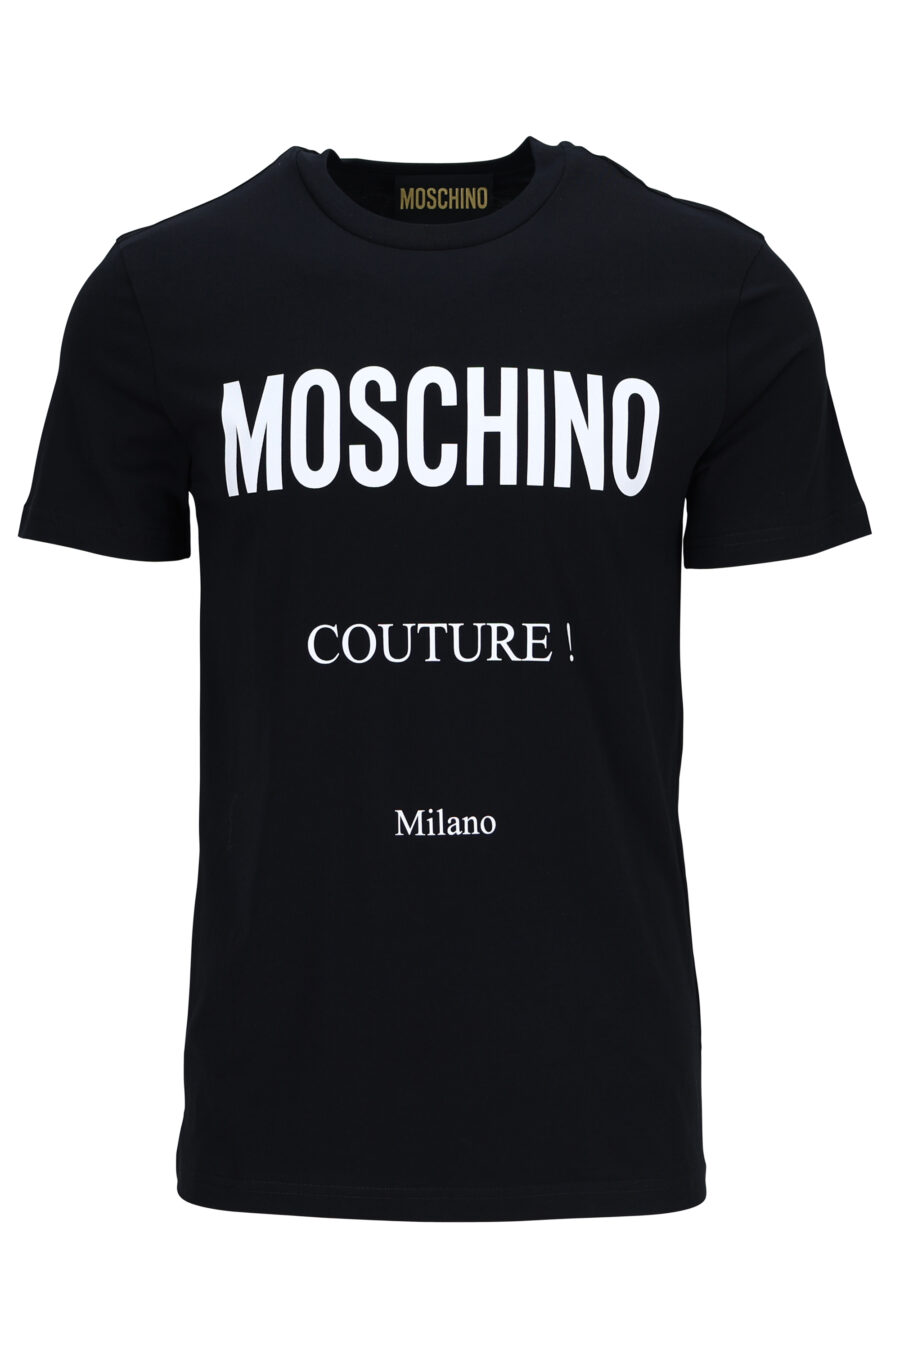 Camiseta negra con maxilogo "couture milano" - 889316936551